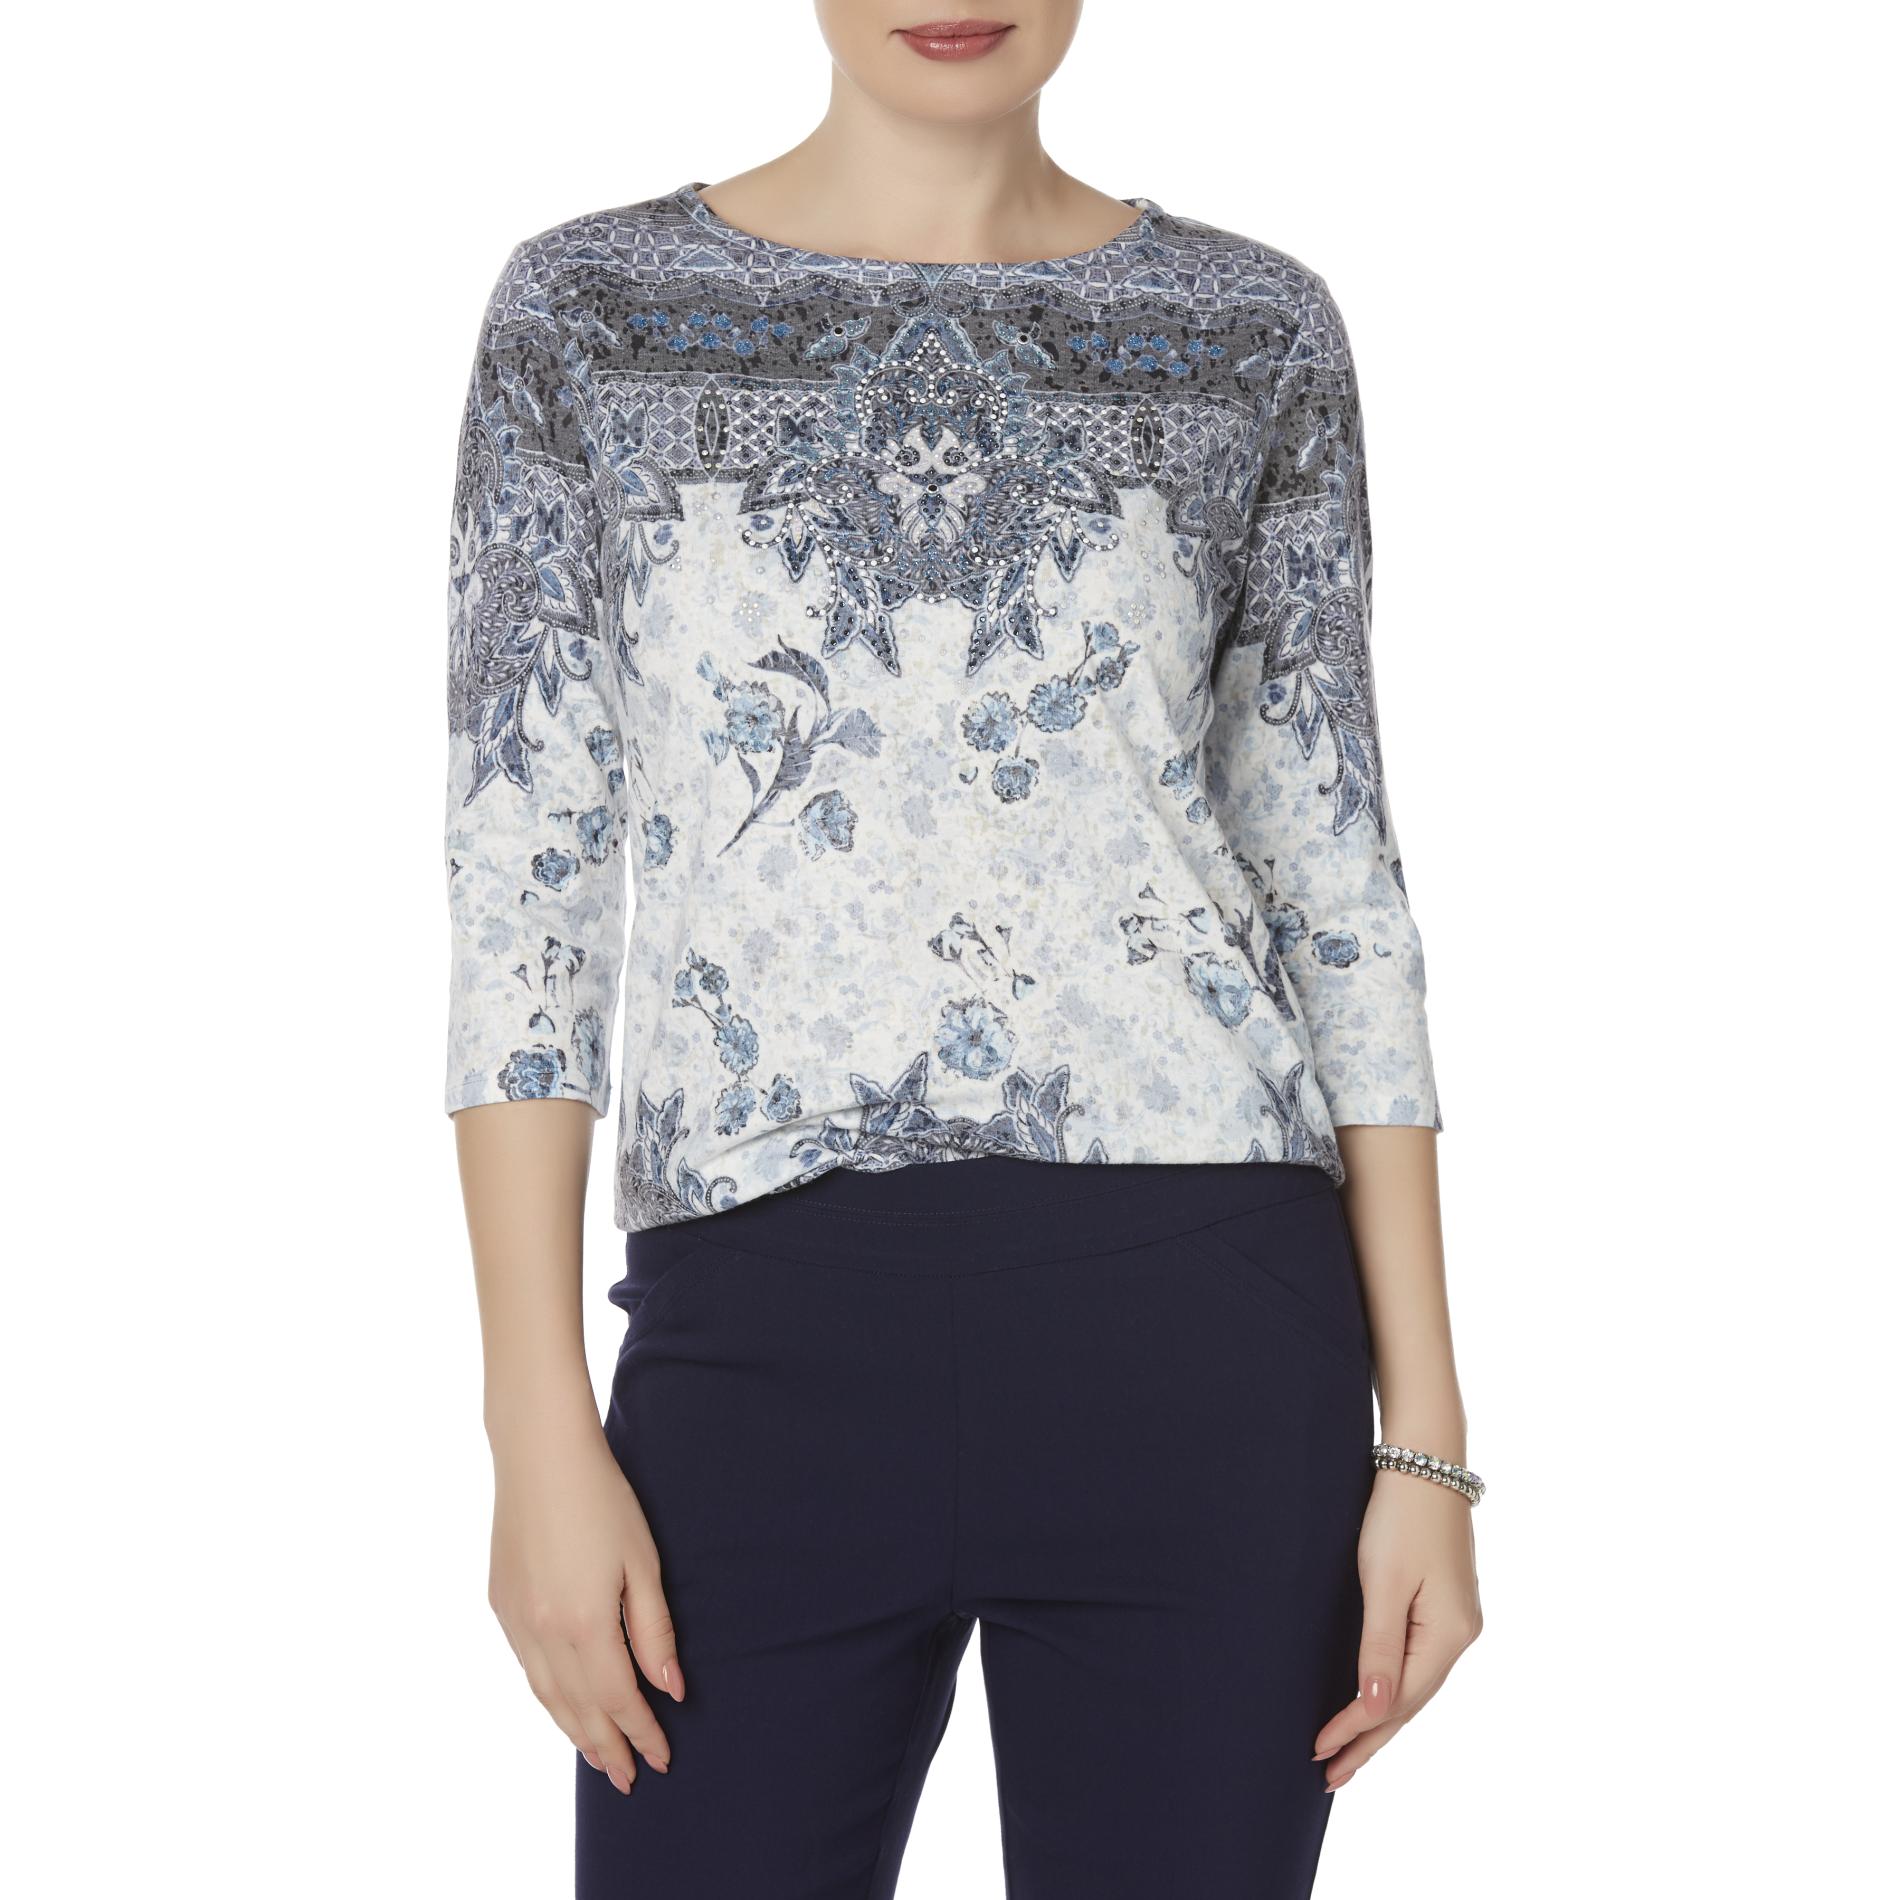 Laura Scott Women's Embellished T-Shirt - Floral & Paisley